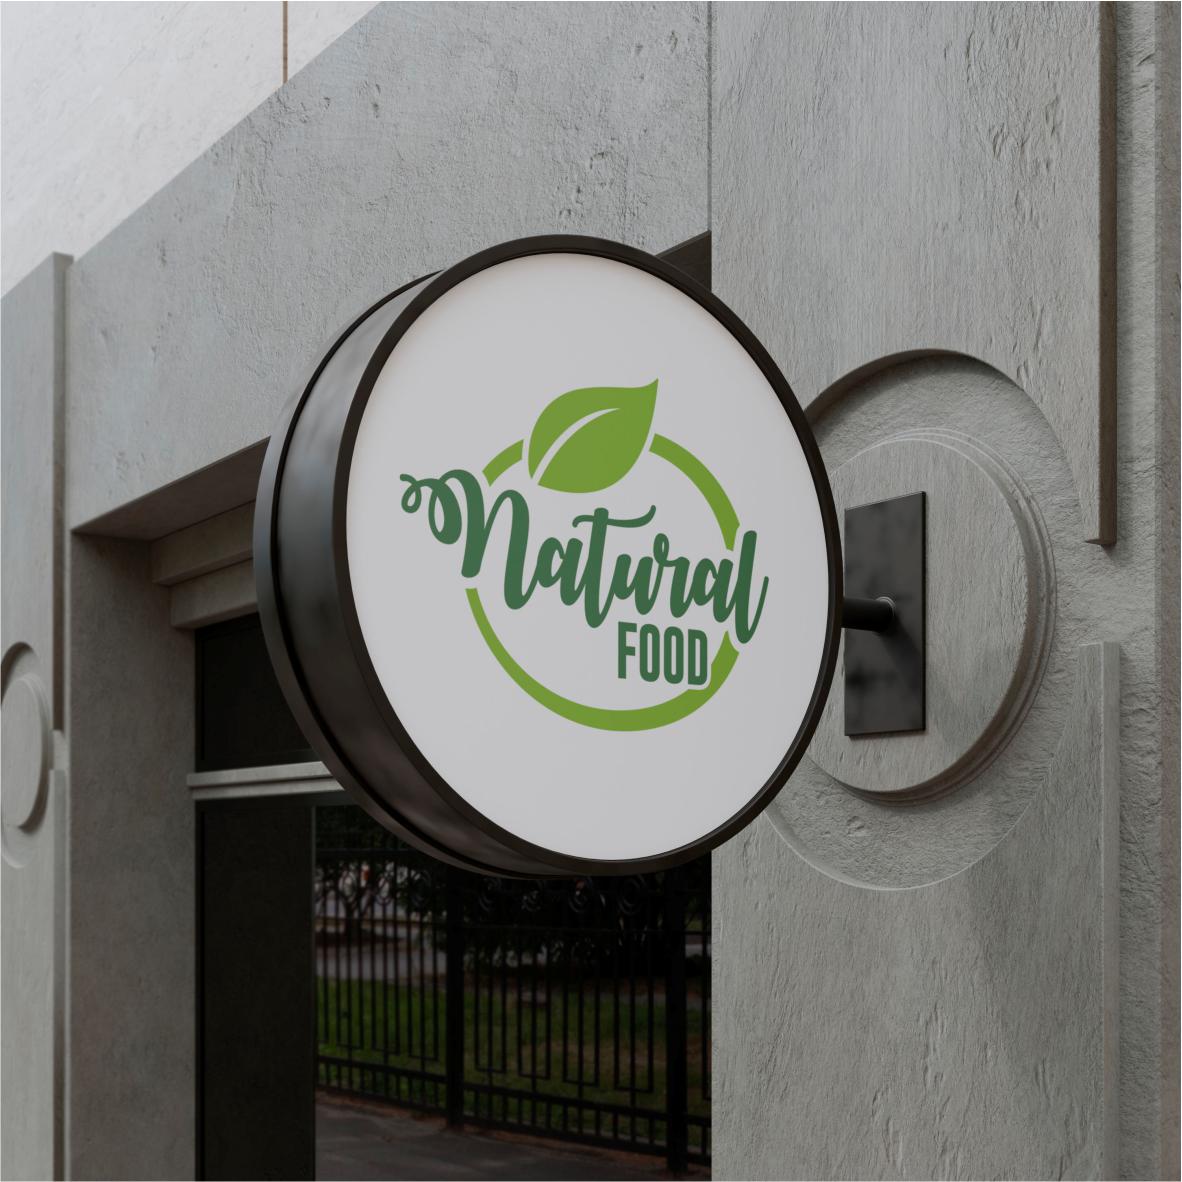 12 natural food design logo collection 3 233